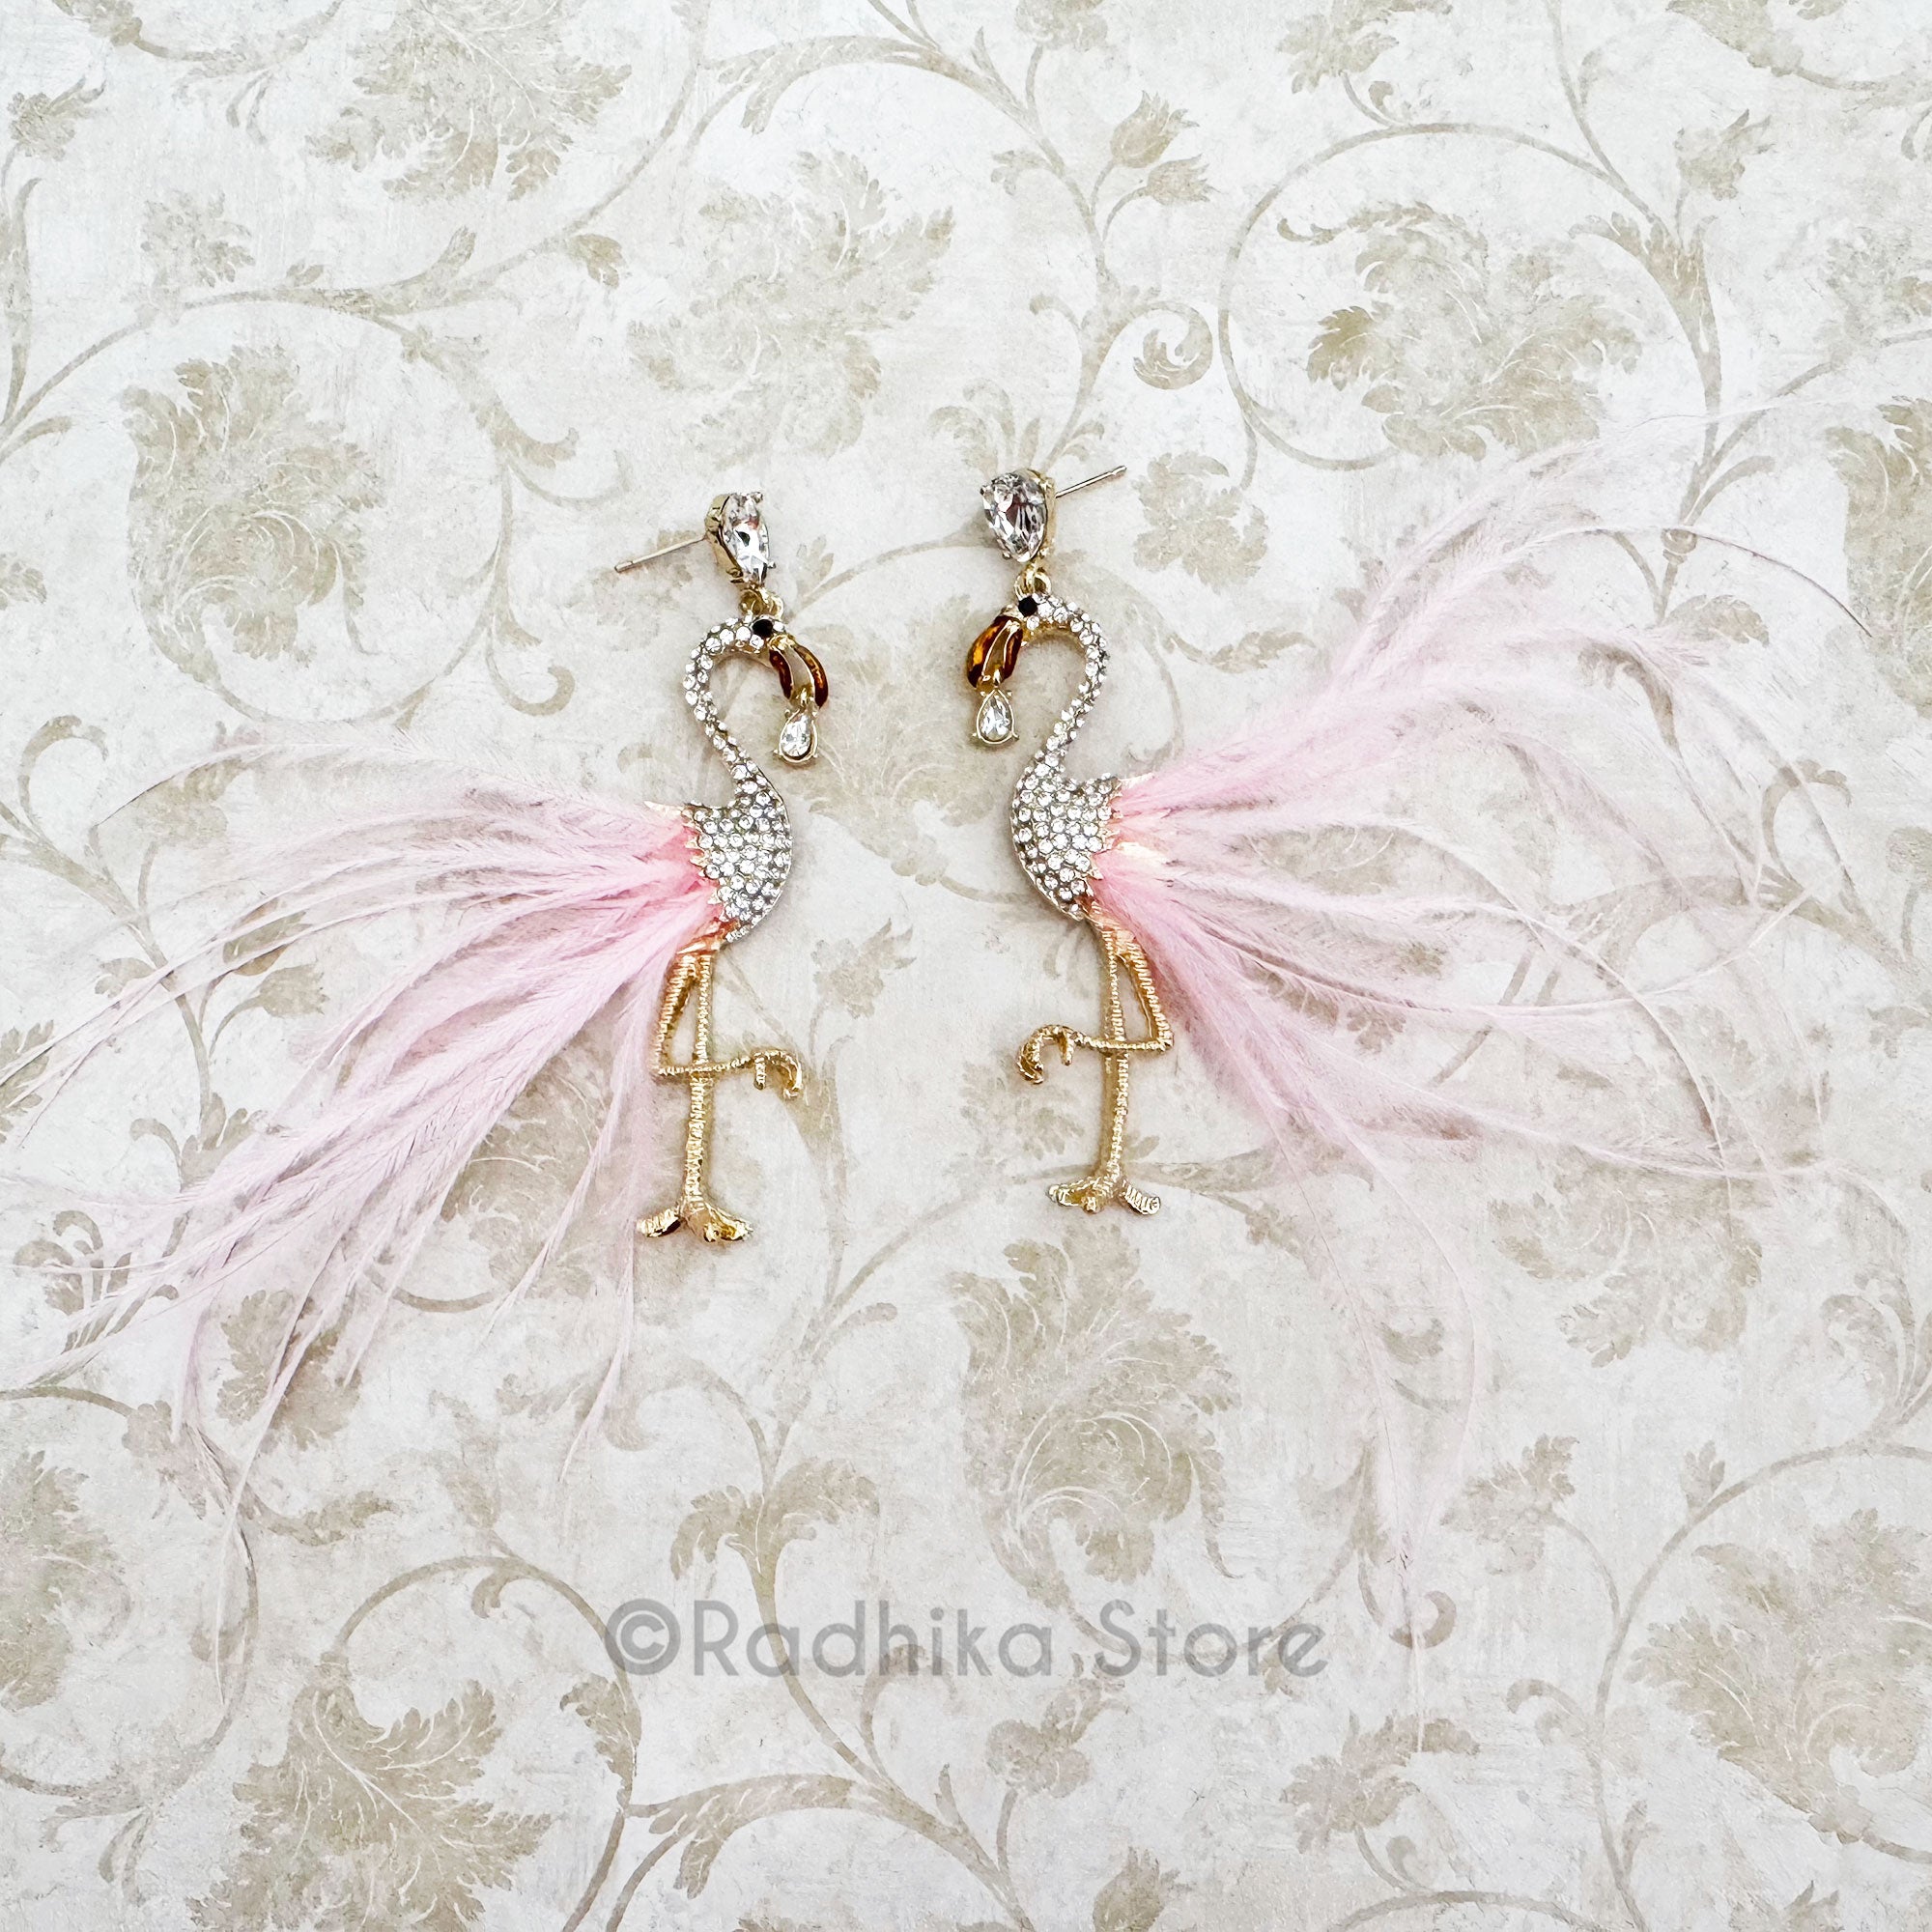 Vrindavan Flamingo- Earrings